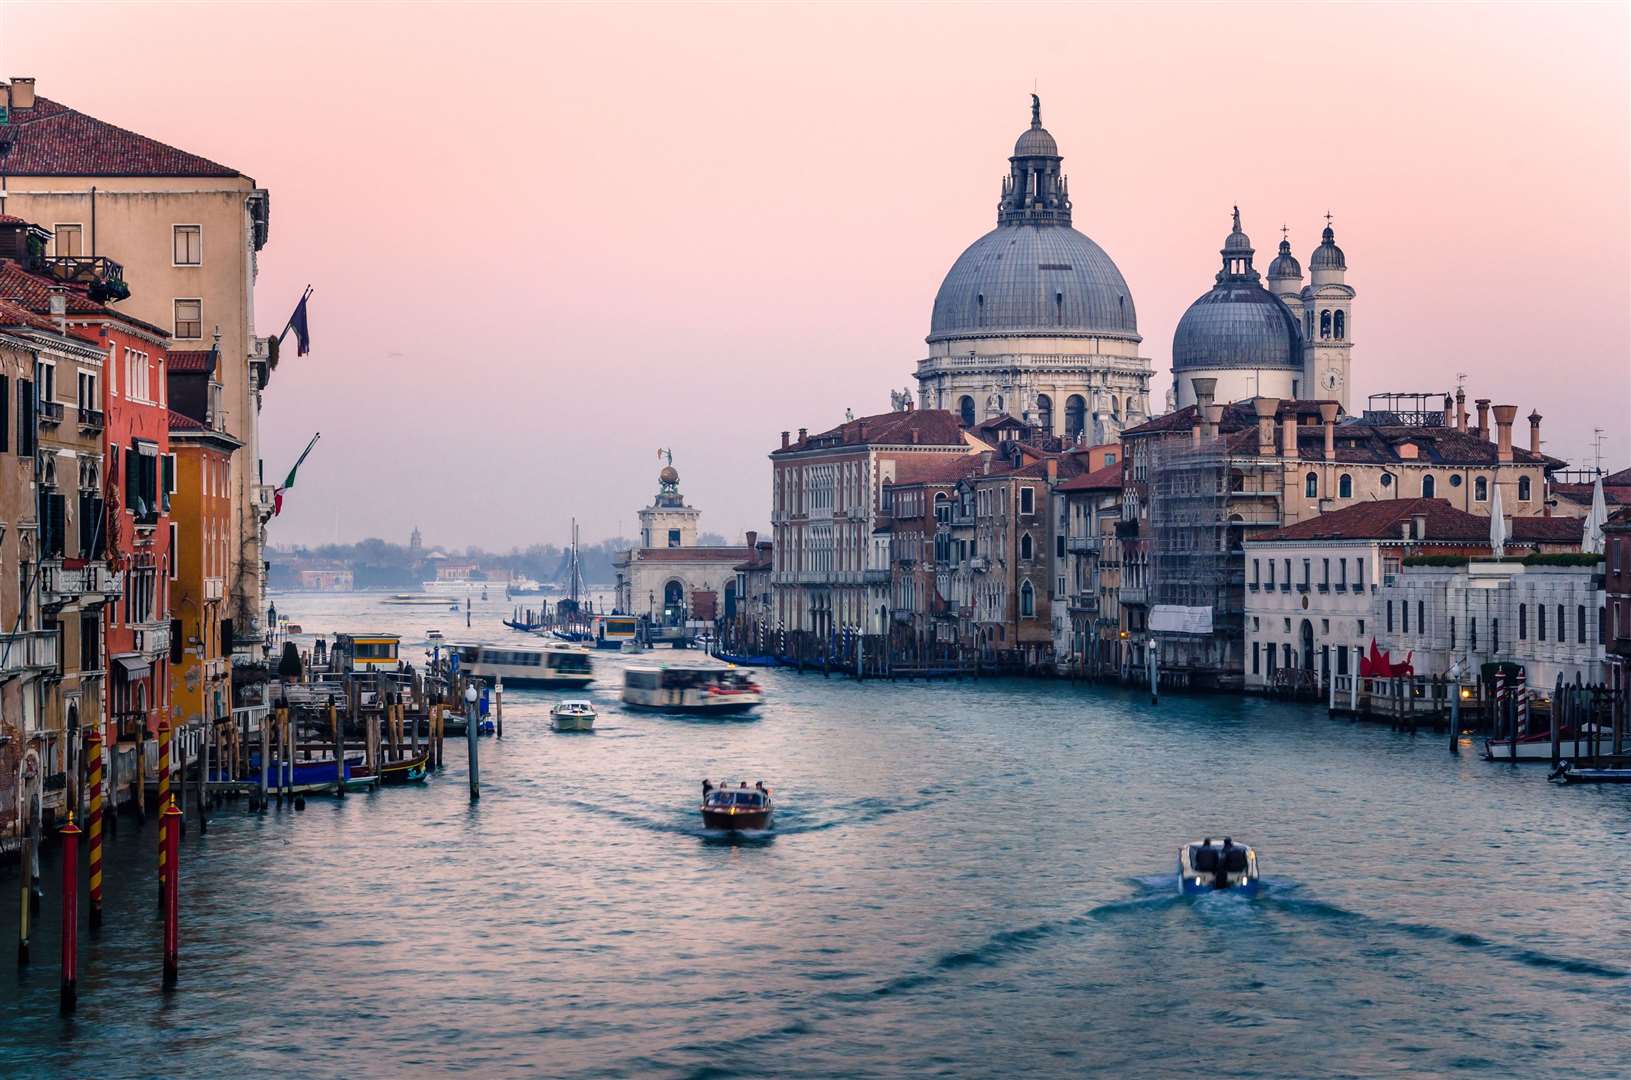 The teachers visited Venice over the half-term break